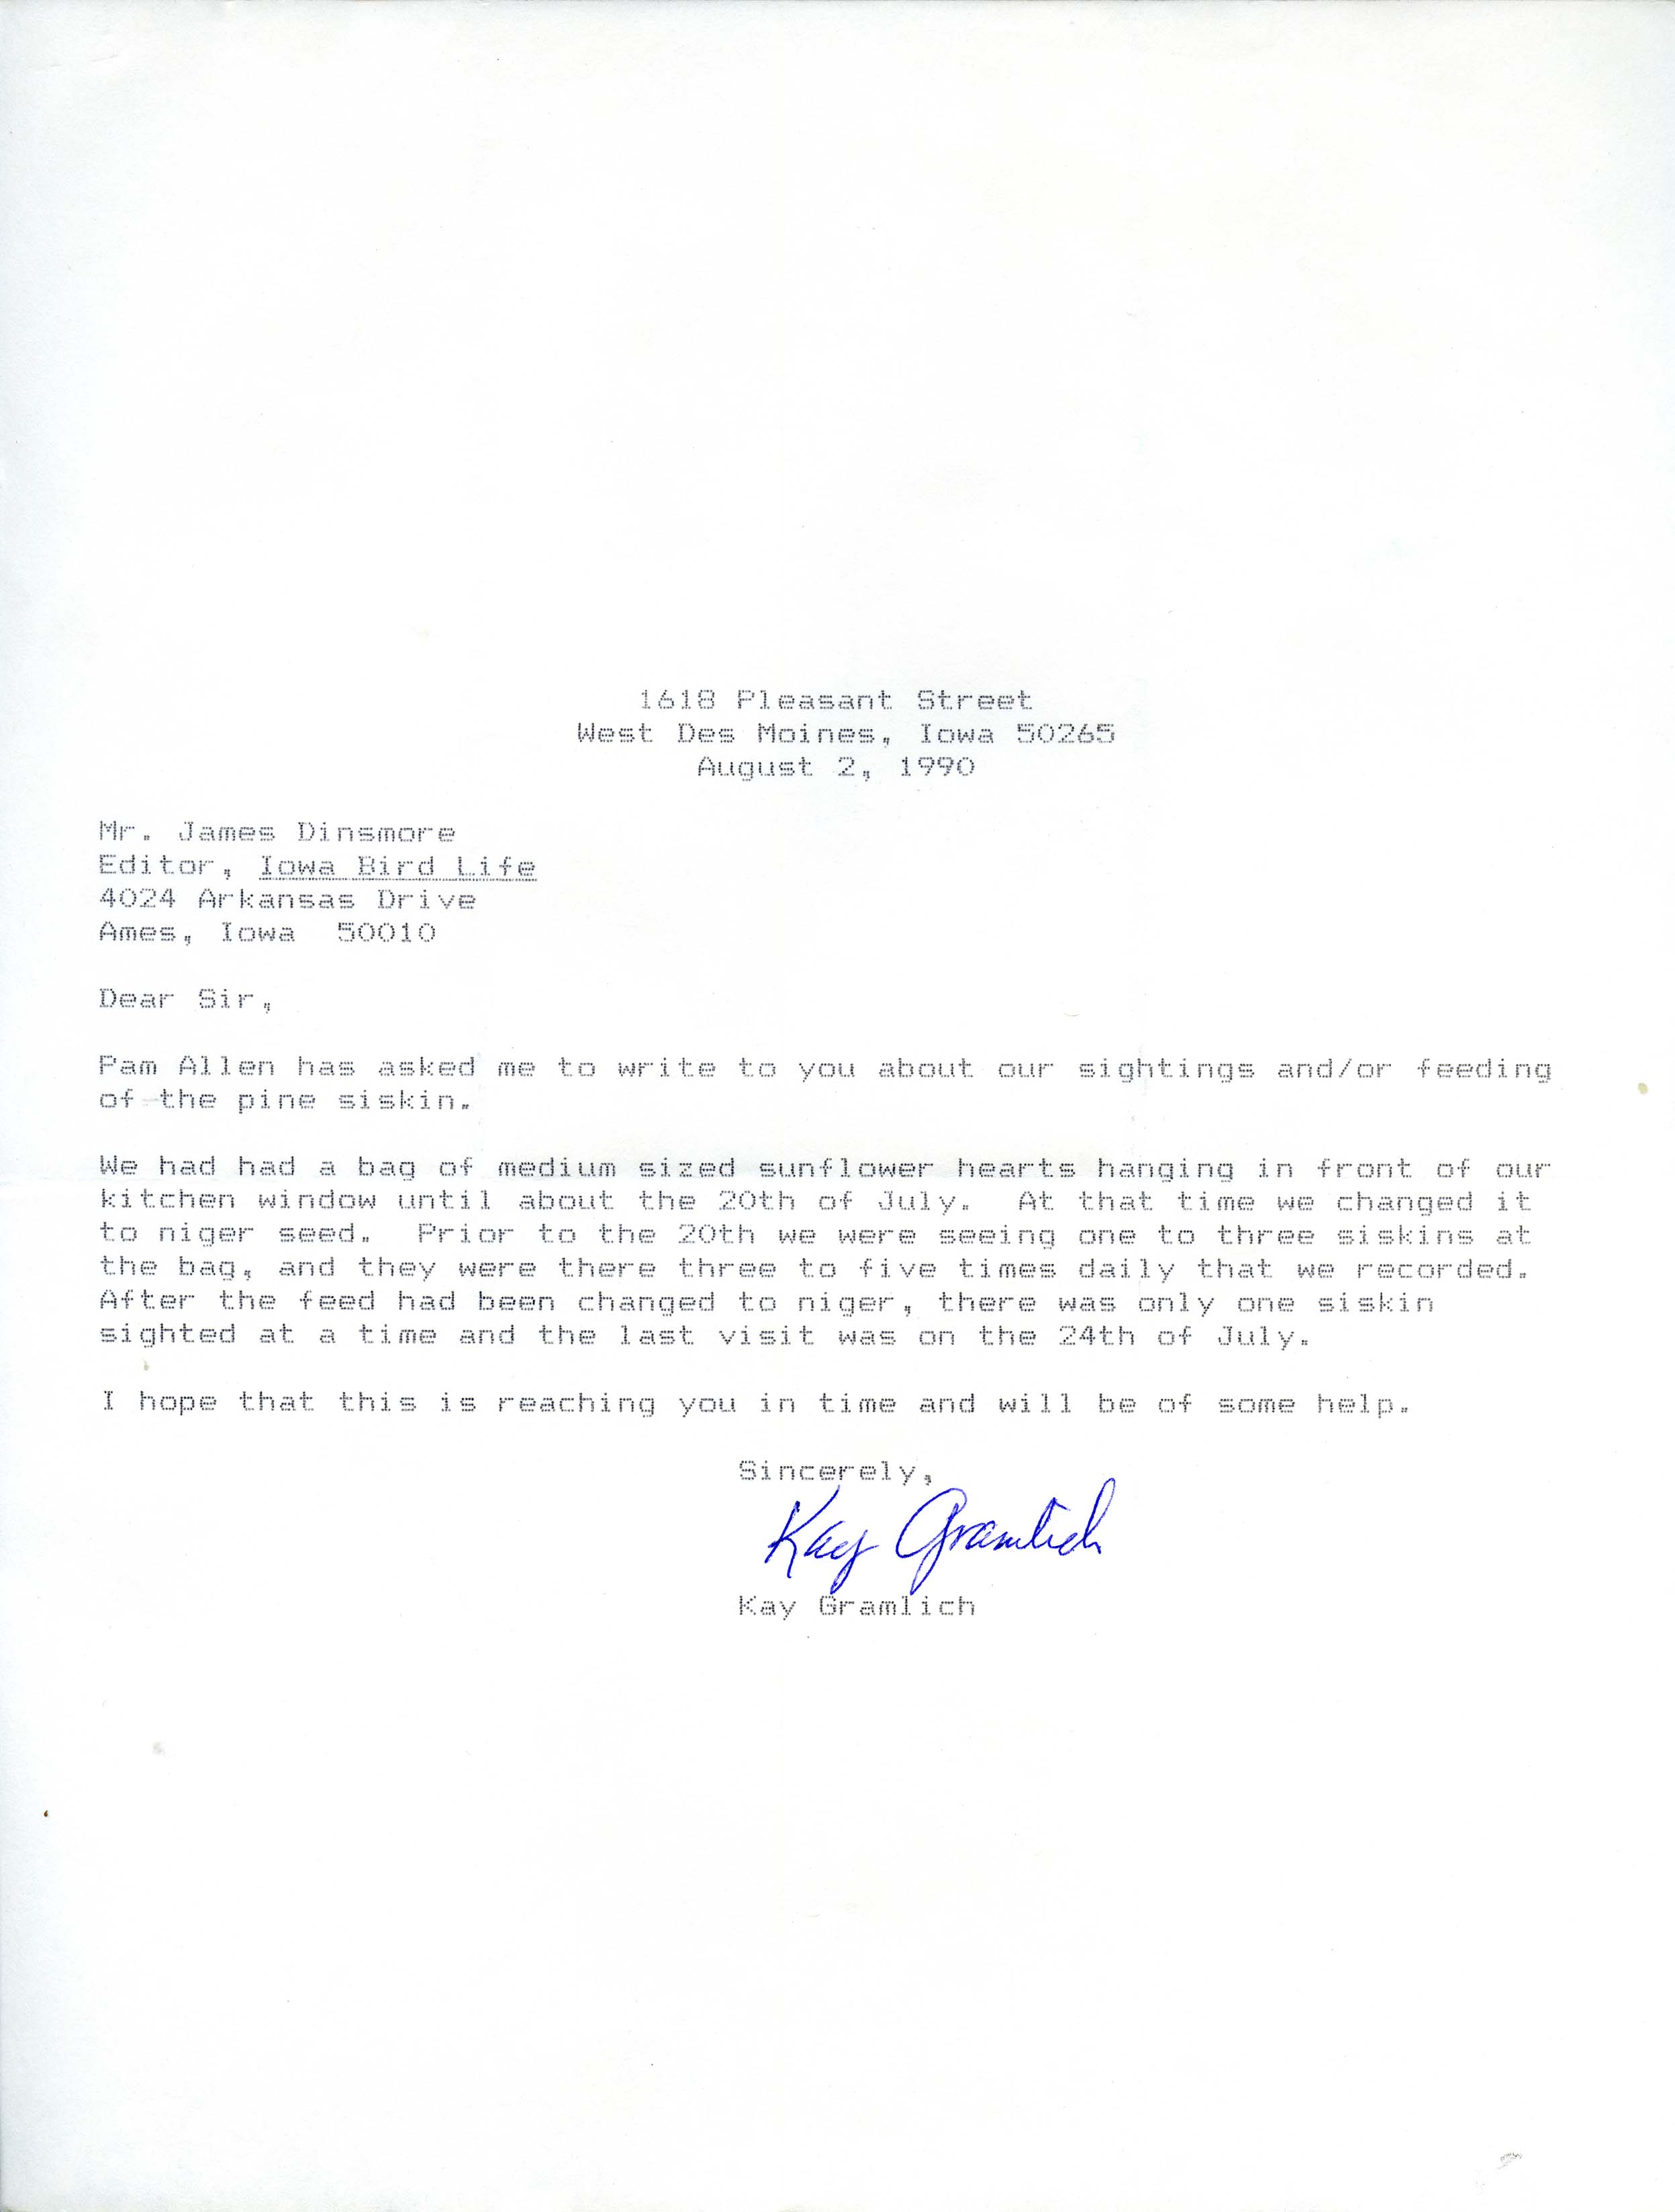 Kay Gramlich letter to James Dinsmore regarding sightings and feeding of pine siskin, August 2, 1990